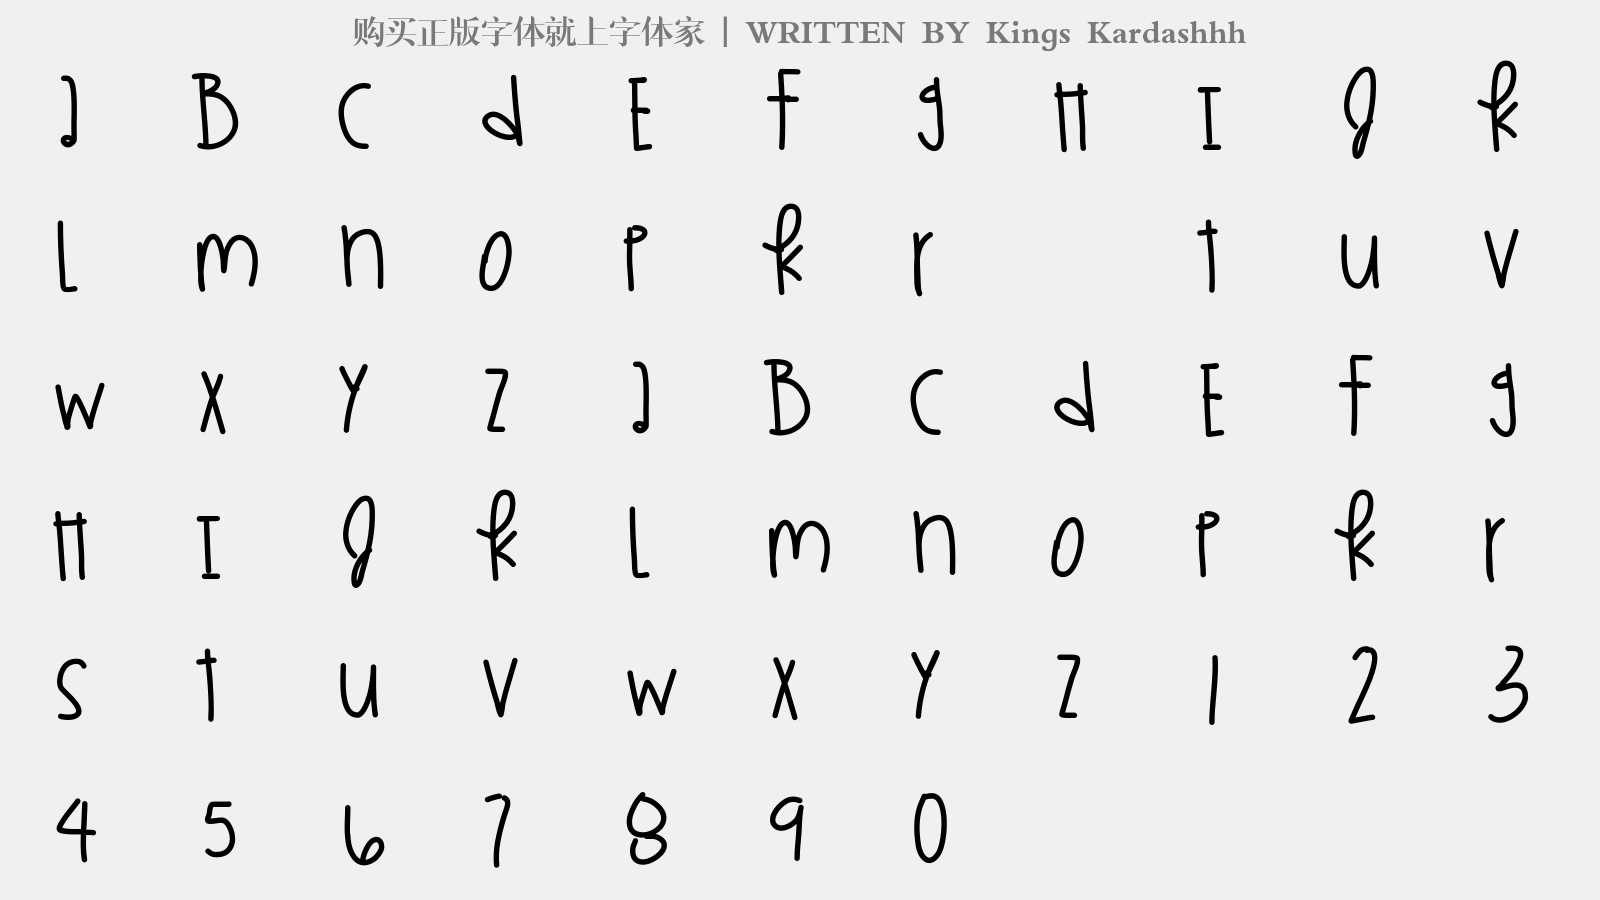 Kings Kardashhh - 大写字母/小写字母/数字